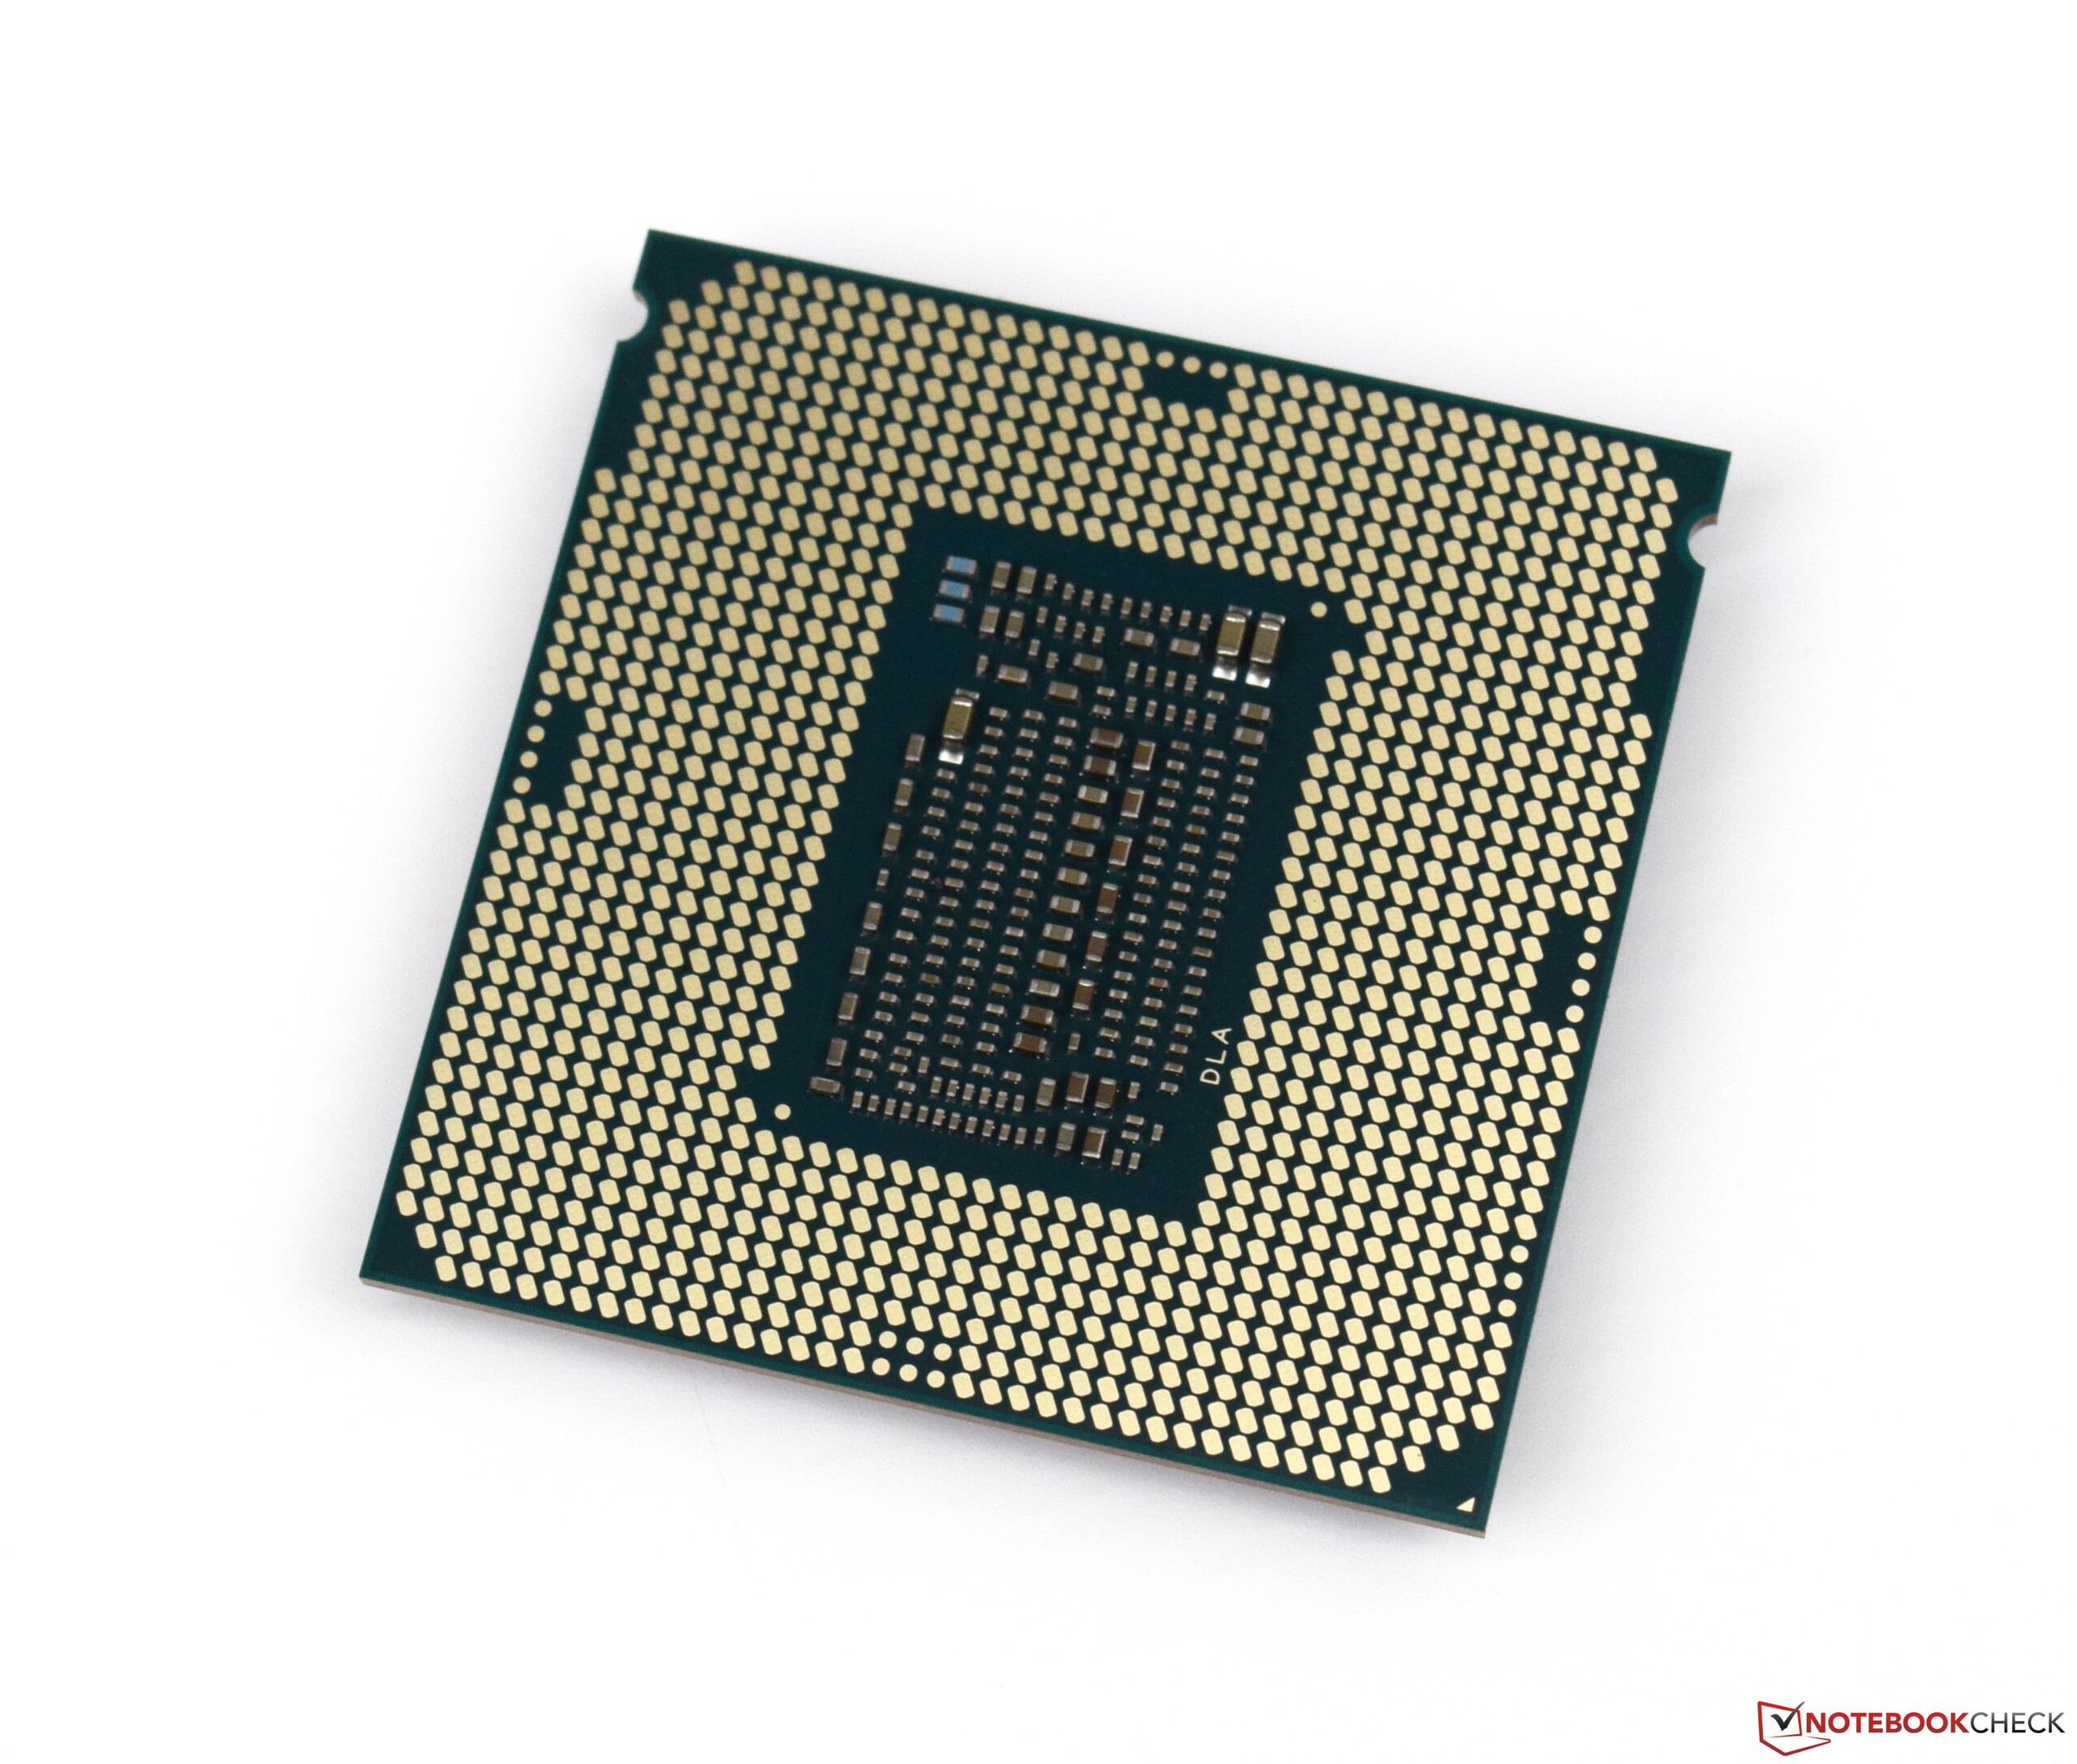 Arashigaoka Rundt om Plateau Intel Core i5-9600K Desktop CPU Review - NotebookCheck.net Reviews